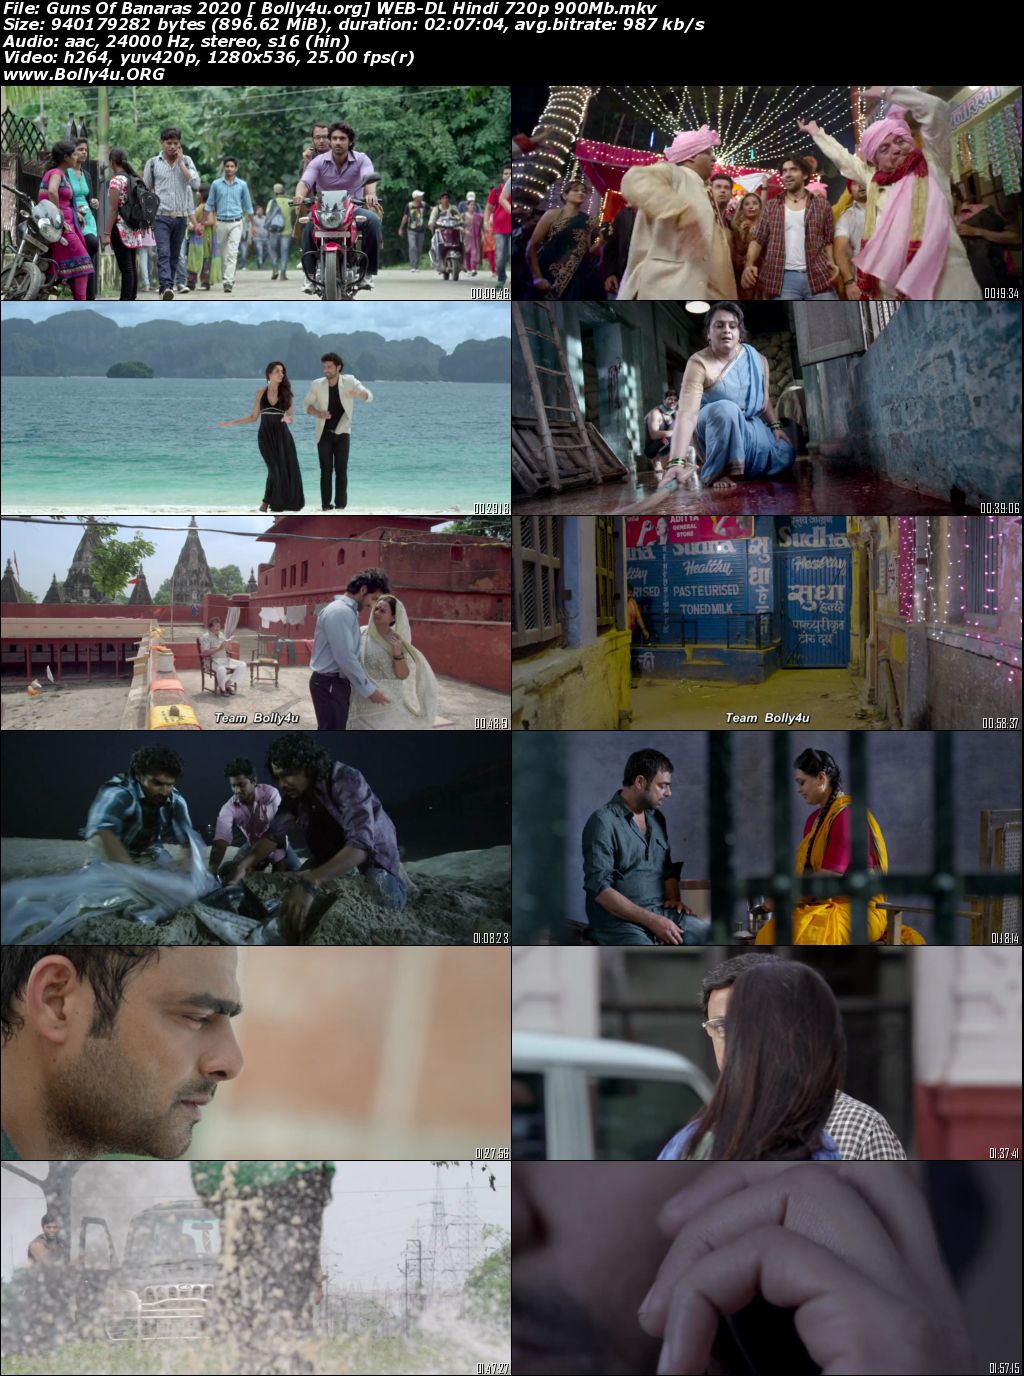 Guns Of Banaras 2020 WEB-DL 300Mb Hindi Movie Download 480p